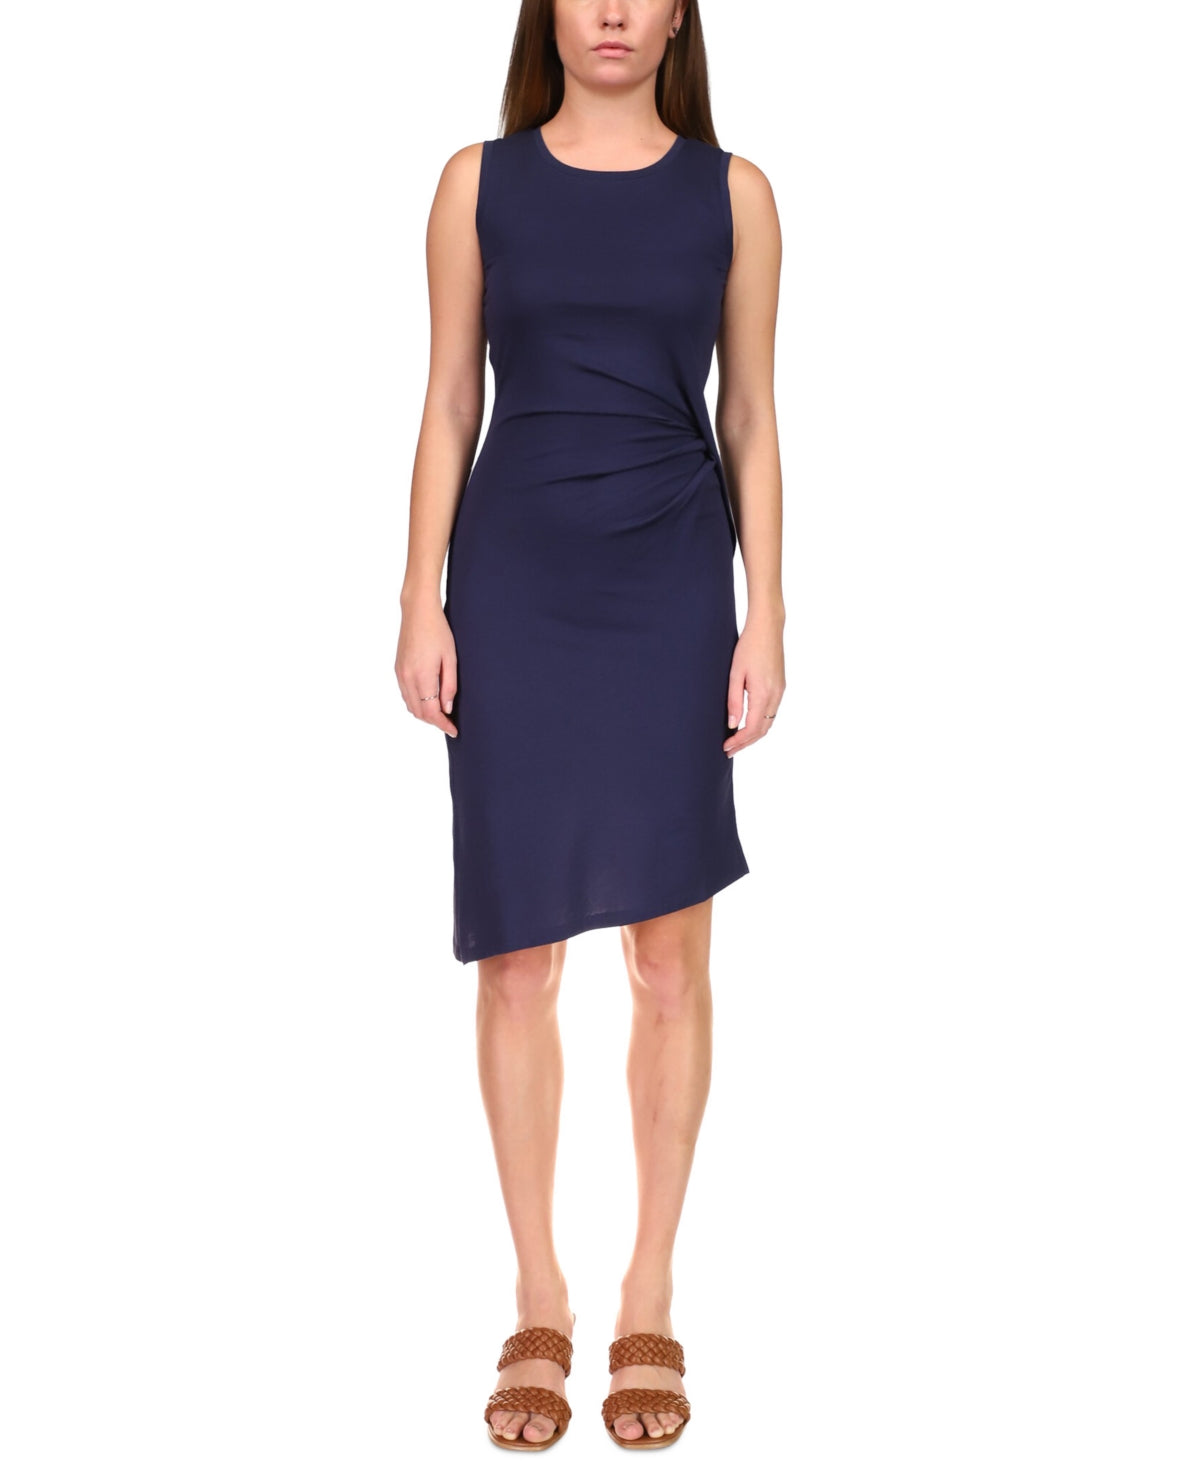 Michael Kors Women's Crewneck Draped Dress Blue Size Petite Medium - Ruumur